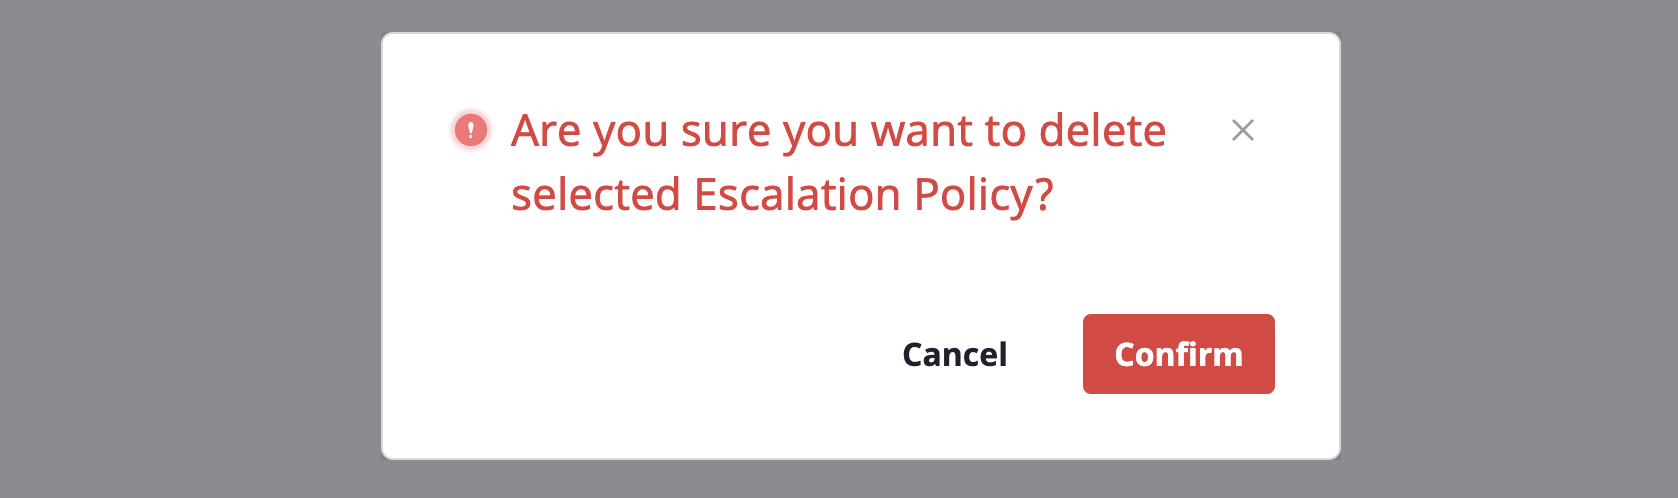 delete-escalation-policy